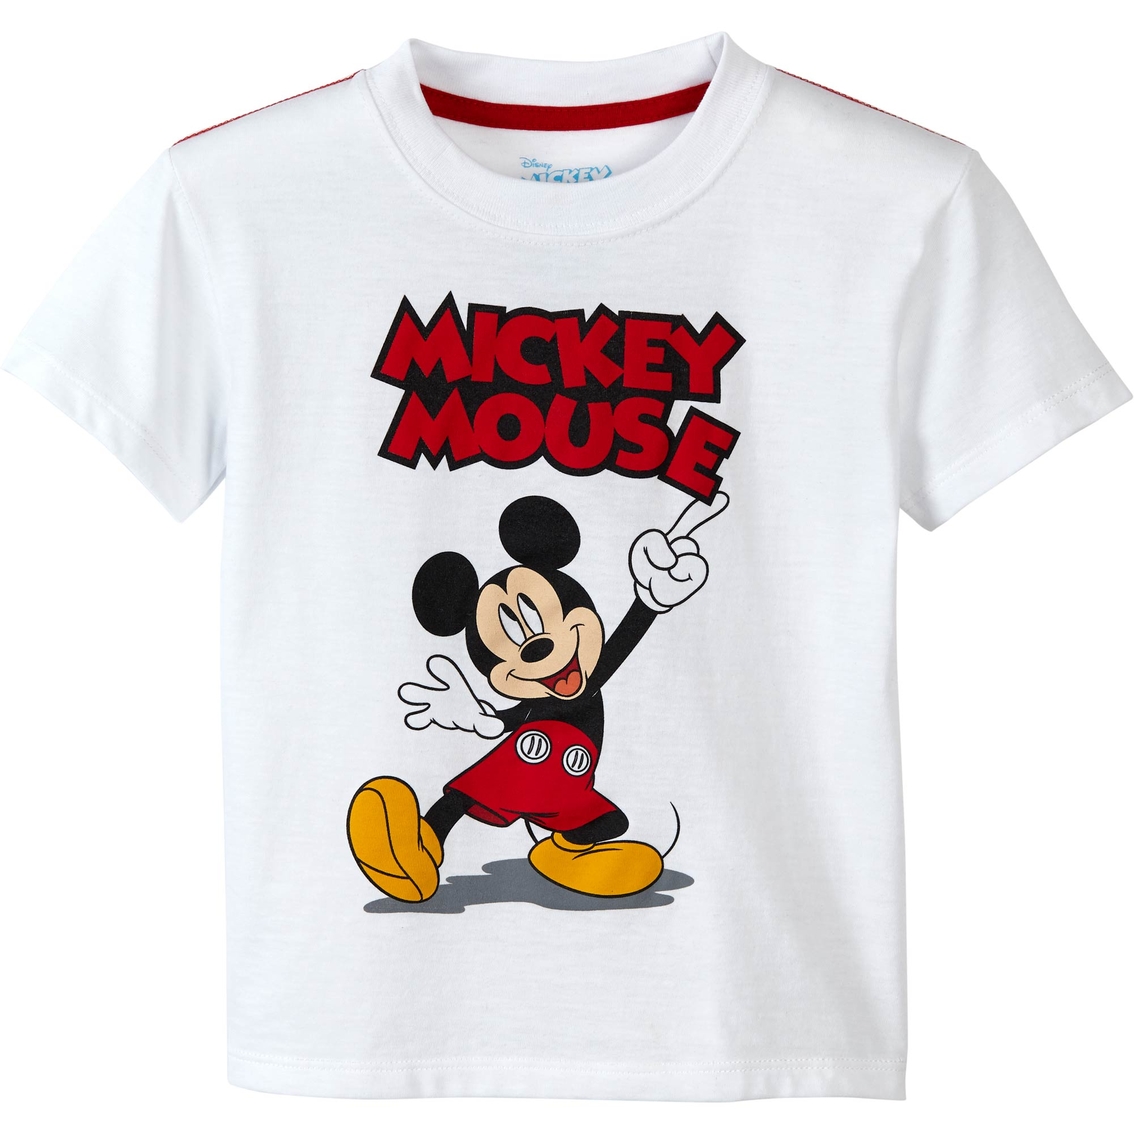 Toddler Boys Mickey Mouse Shirt 